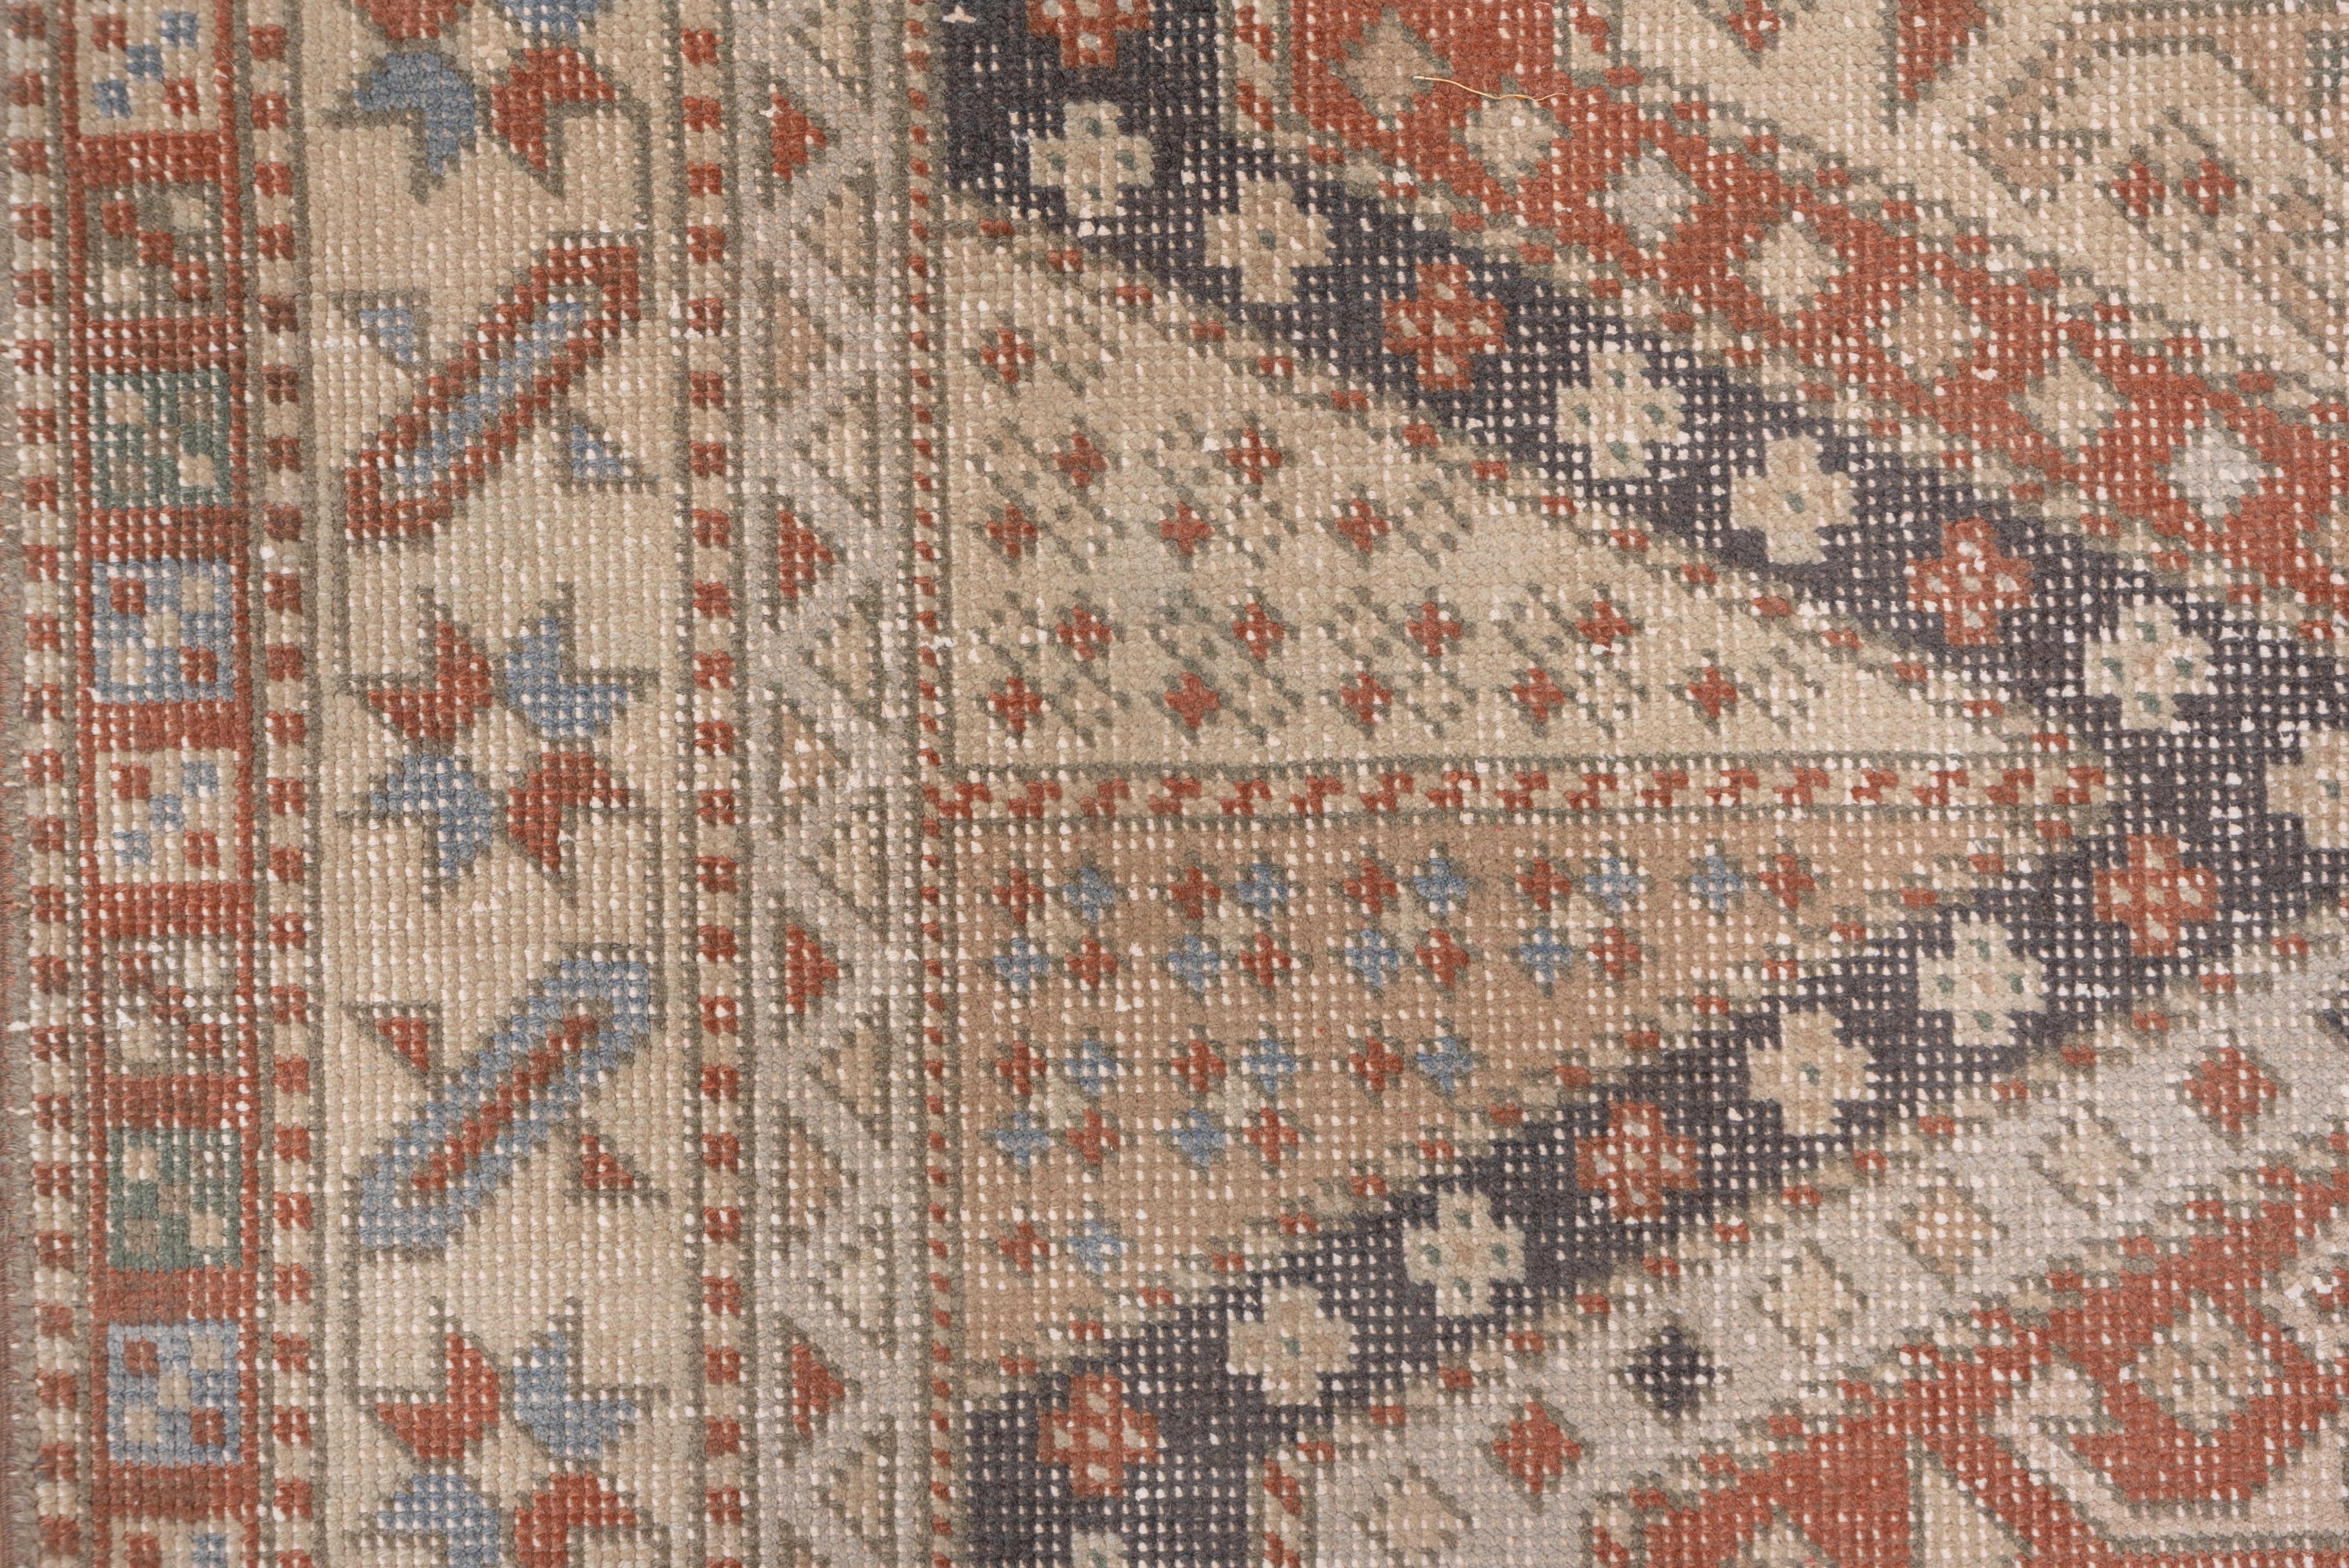 Wool Vintage Tribal Turkish Sparta Carpet Geometric Design, Brown, Ivory & Blue Tones For Sale